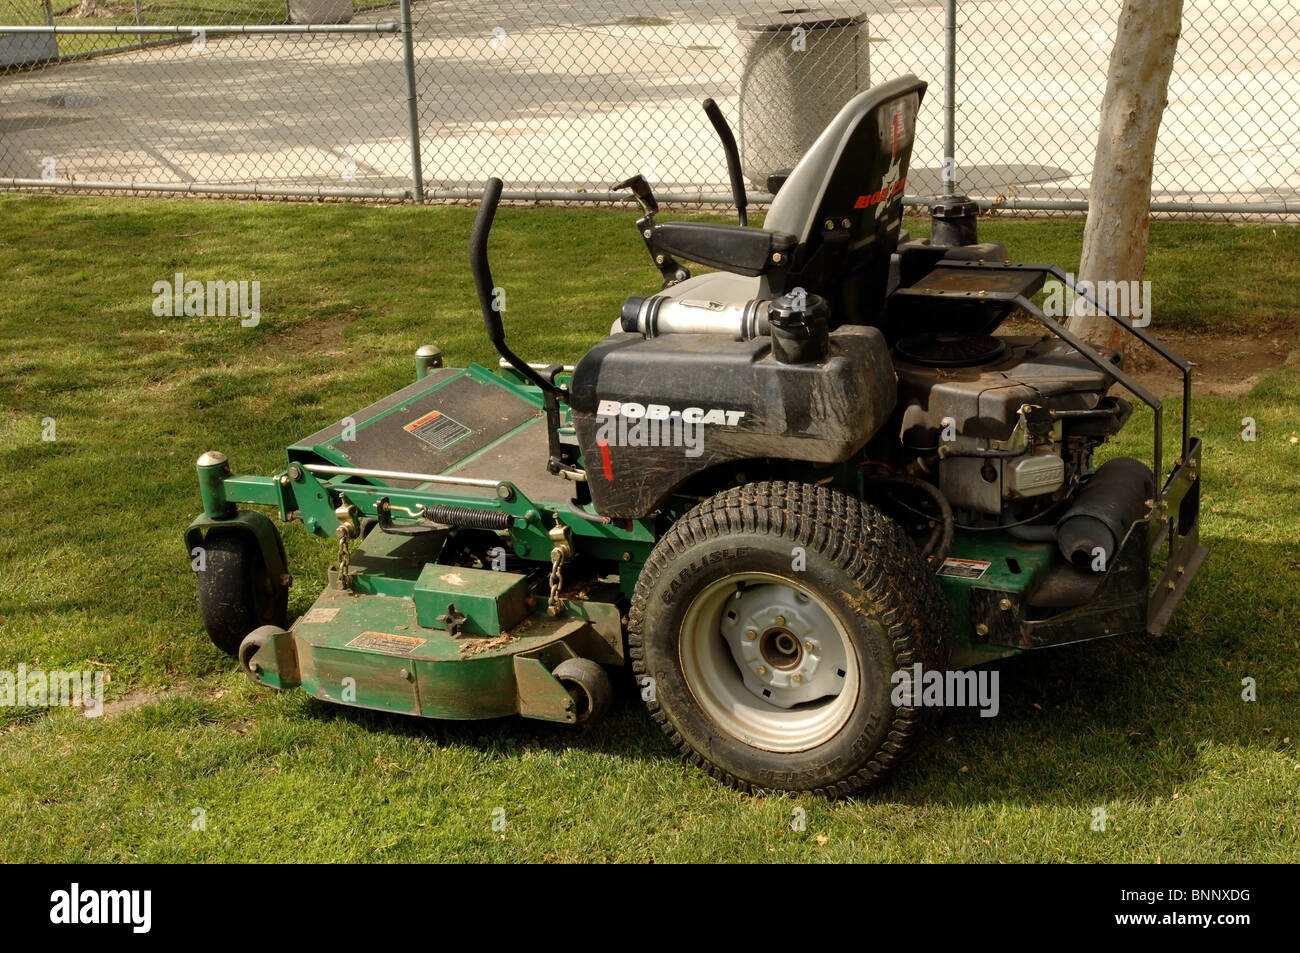 Bobcat ride-on lawnmower. Stock Photo